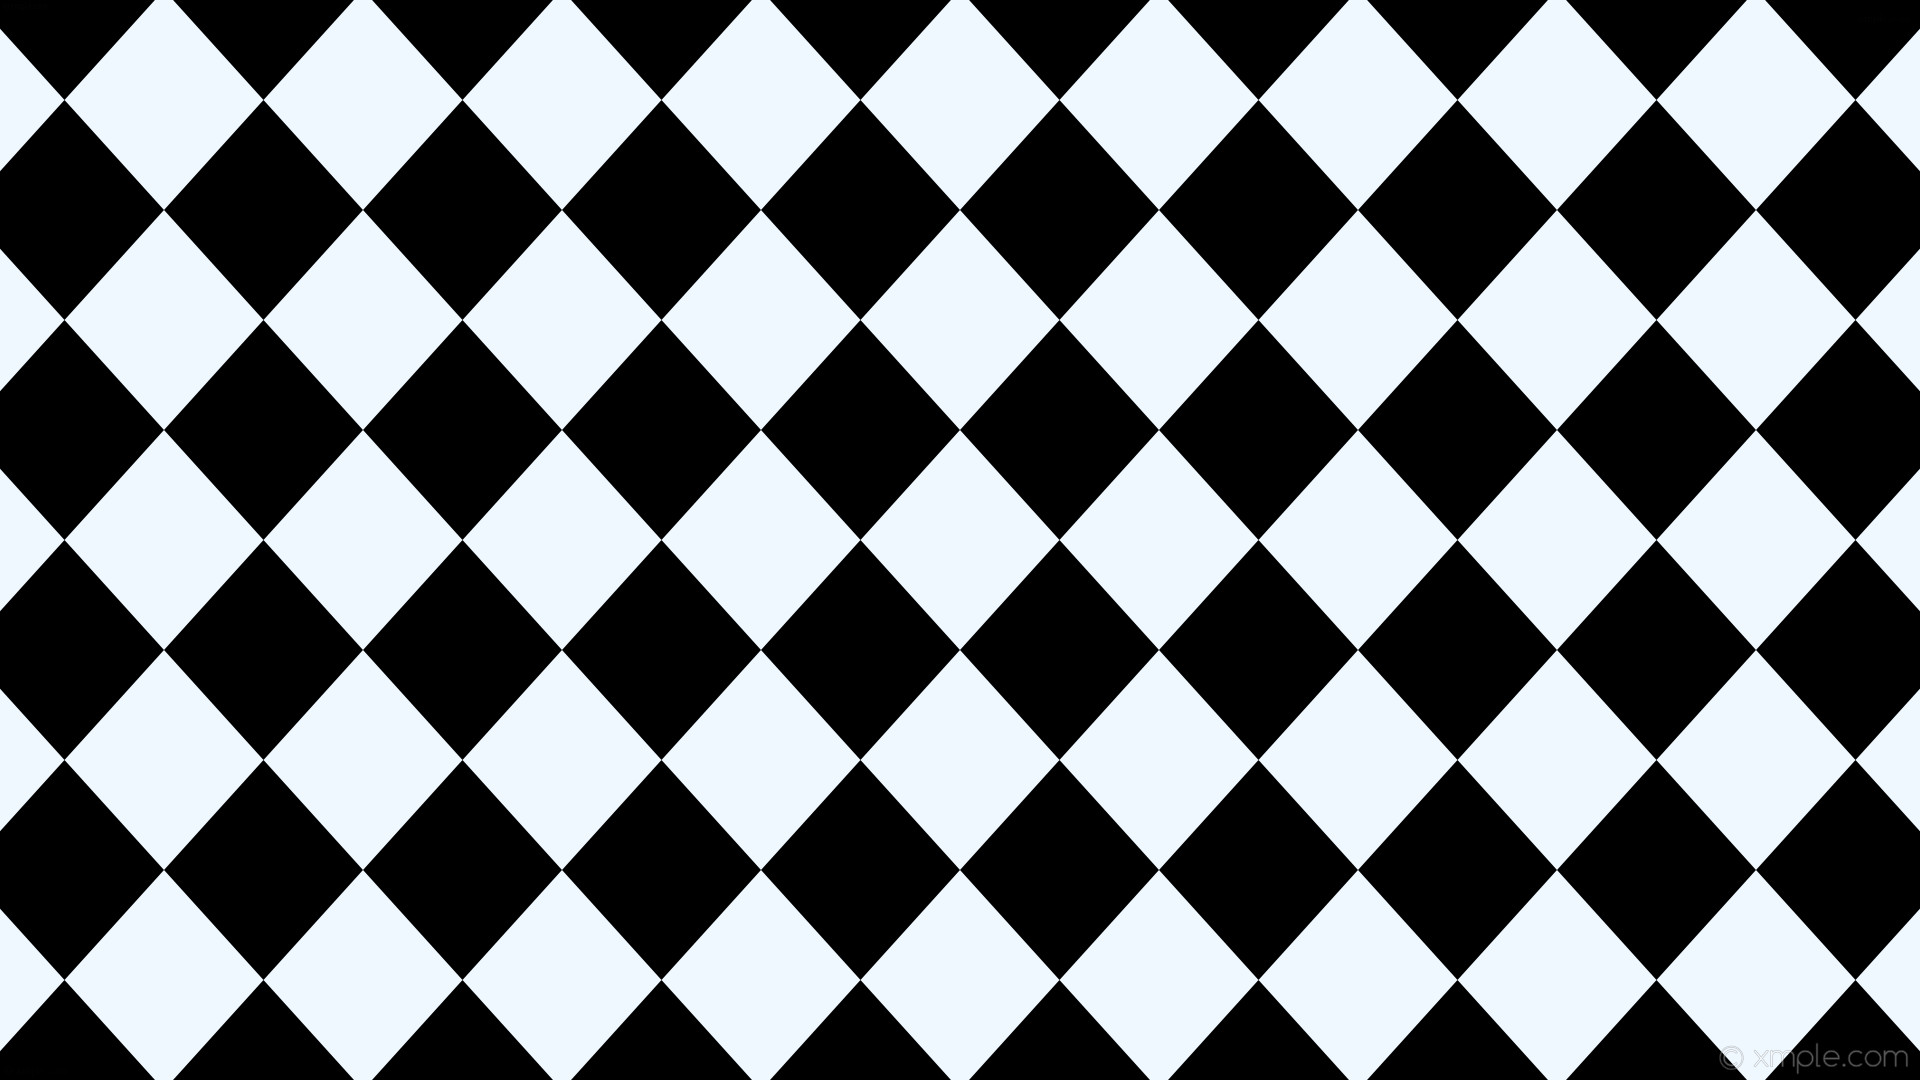 1920x1080 wallpaper rhombus black white lozenge diamond alice blue #f0f8ff #000000  90Â° 220px 199px